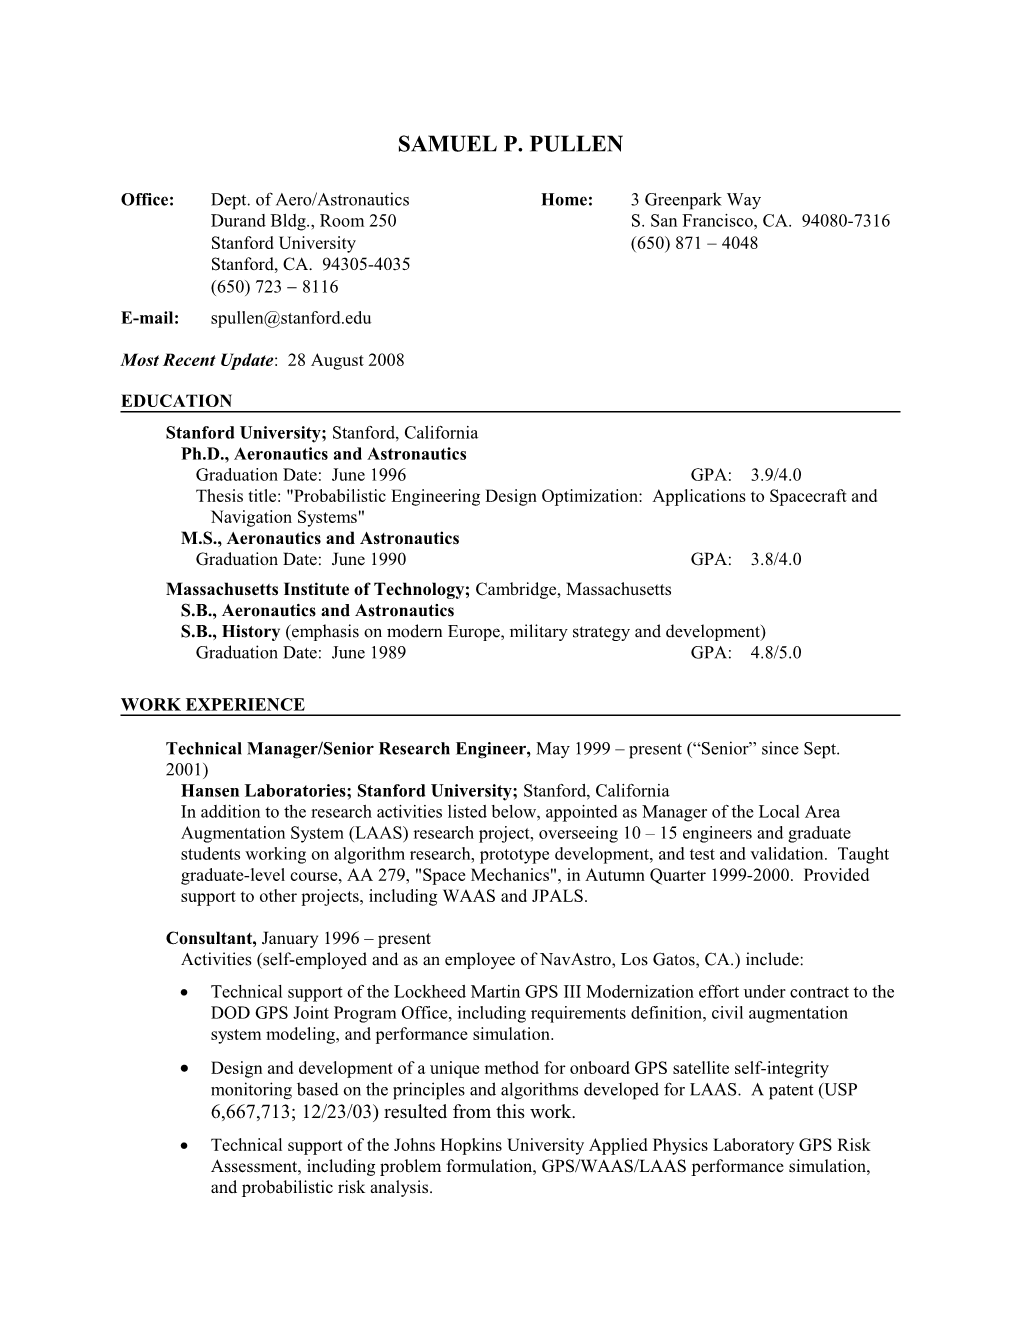 AIAA Generic Resume